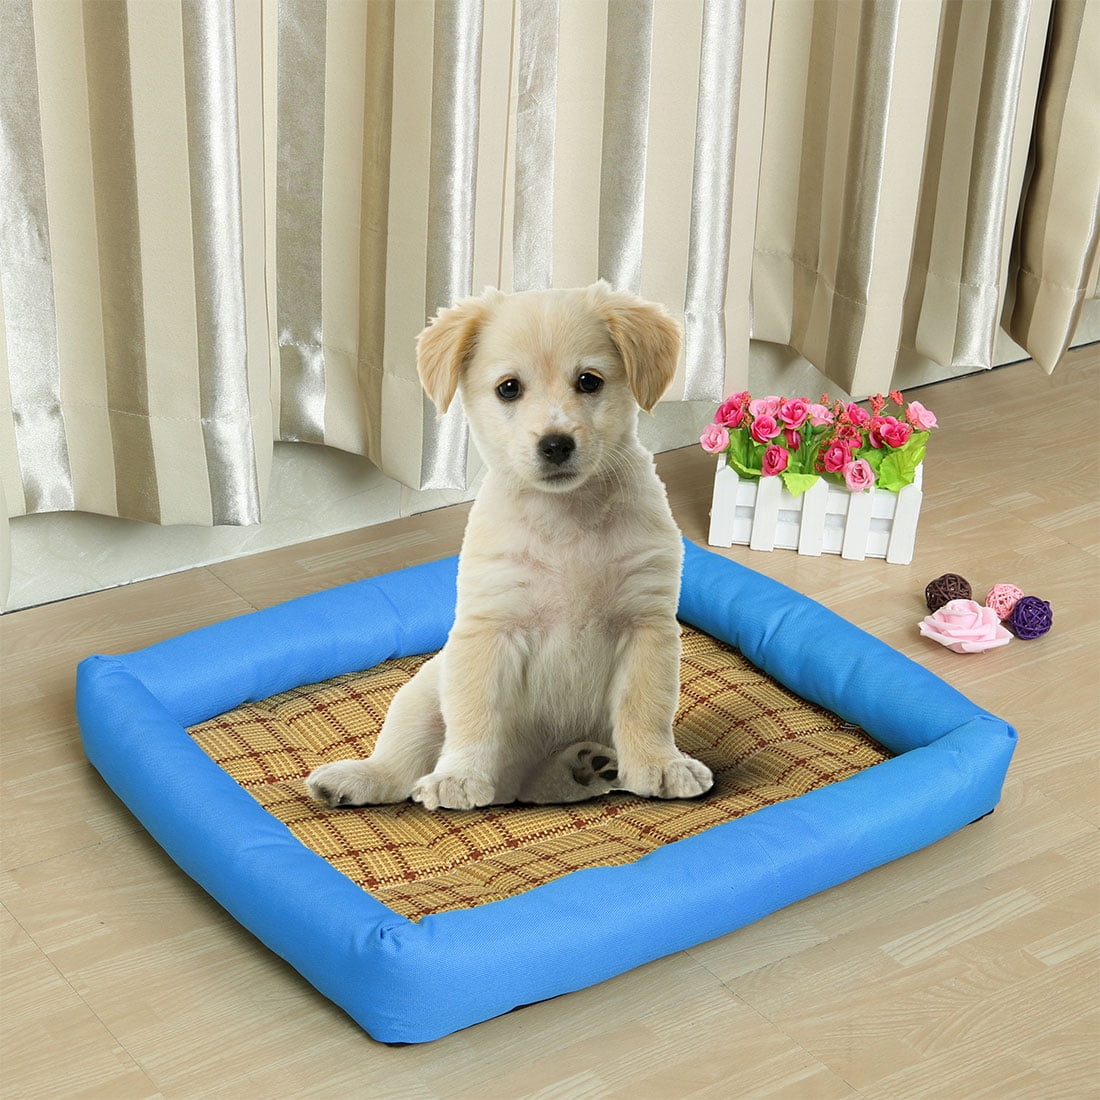 Pet Dog Cat Heat Resistant Pad Bamboo Carpet Summer Sleeping Bed